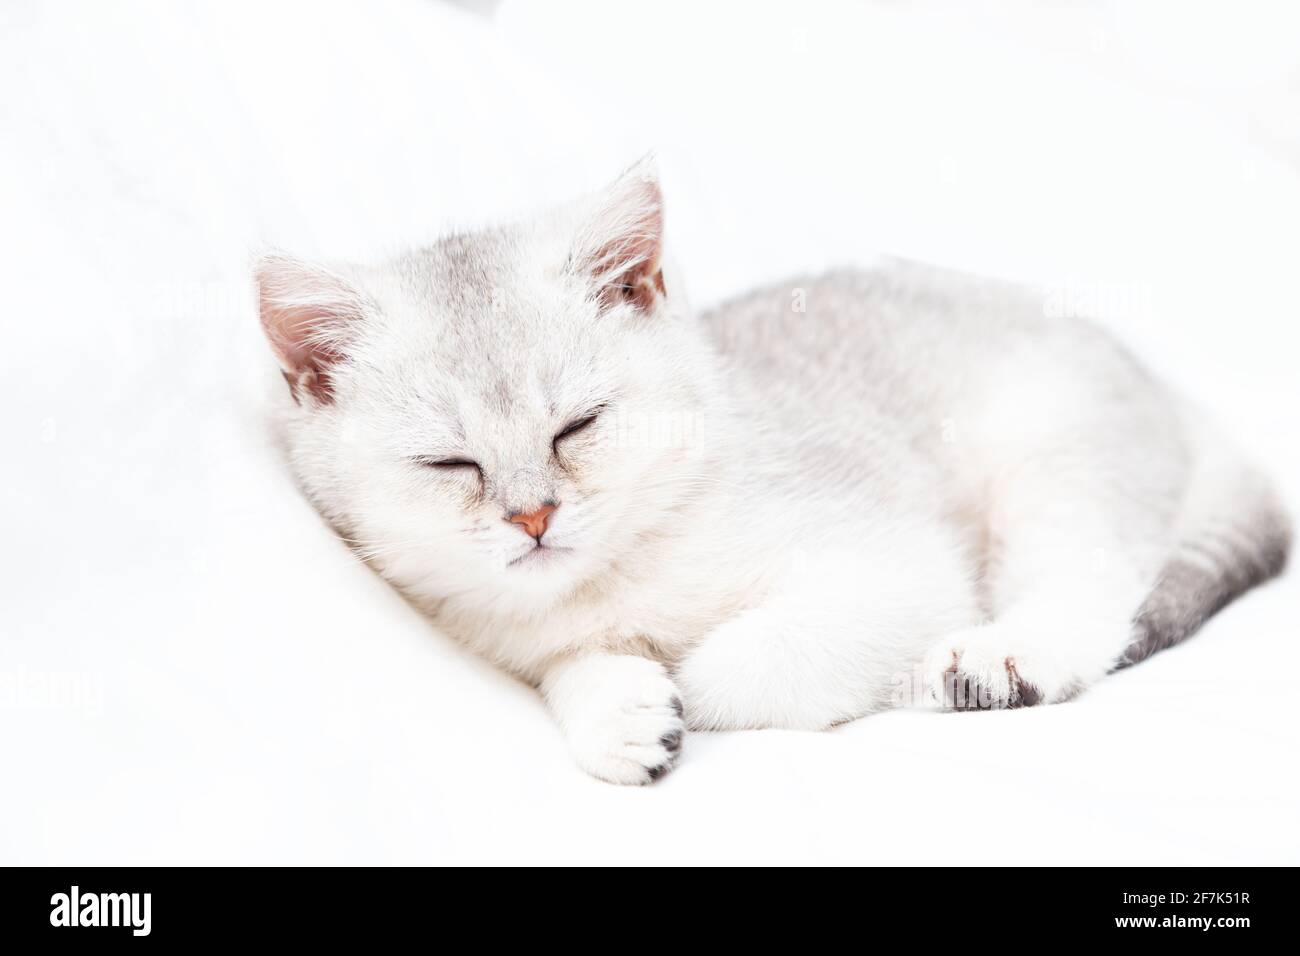 Small white British kitten sleeping on a white blanket. Funny pet. Copy space. Stock Photo